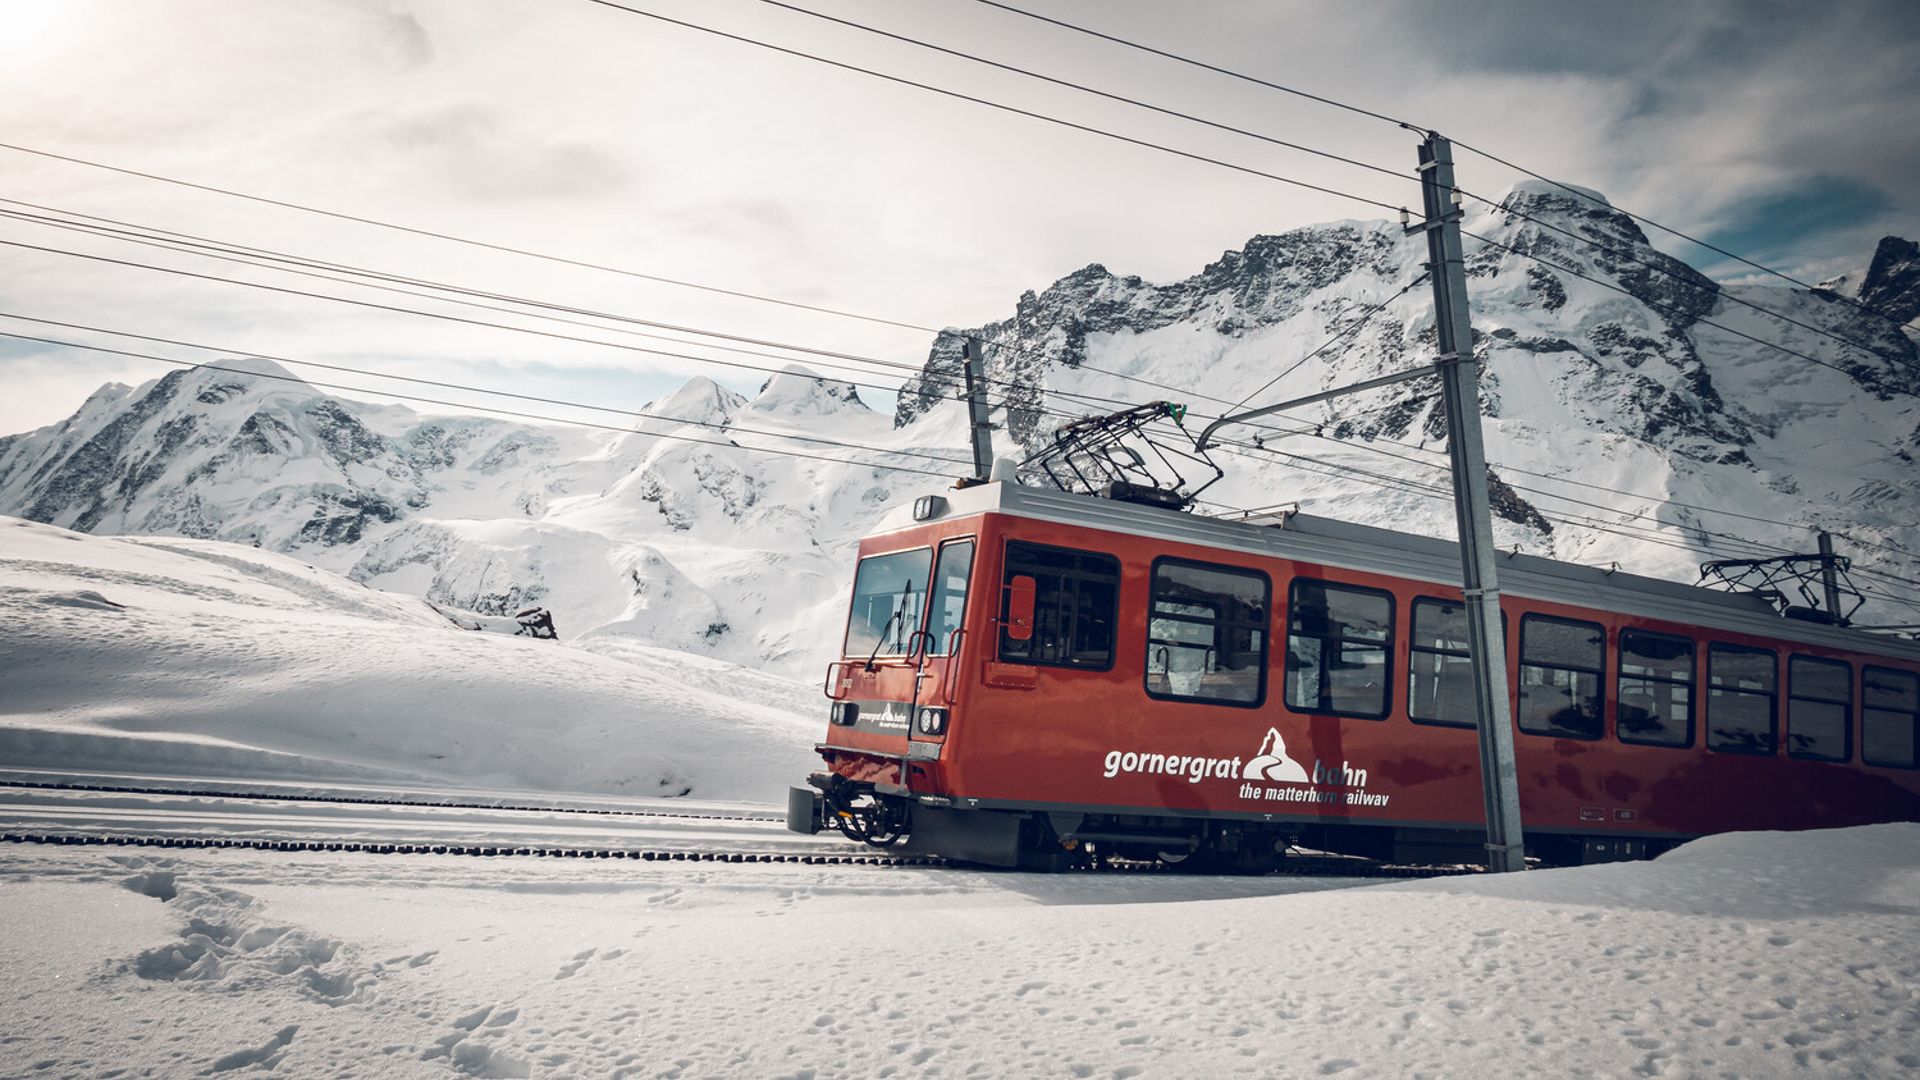 Gornergrat Bahn in the snow in front of mountains